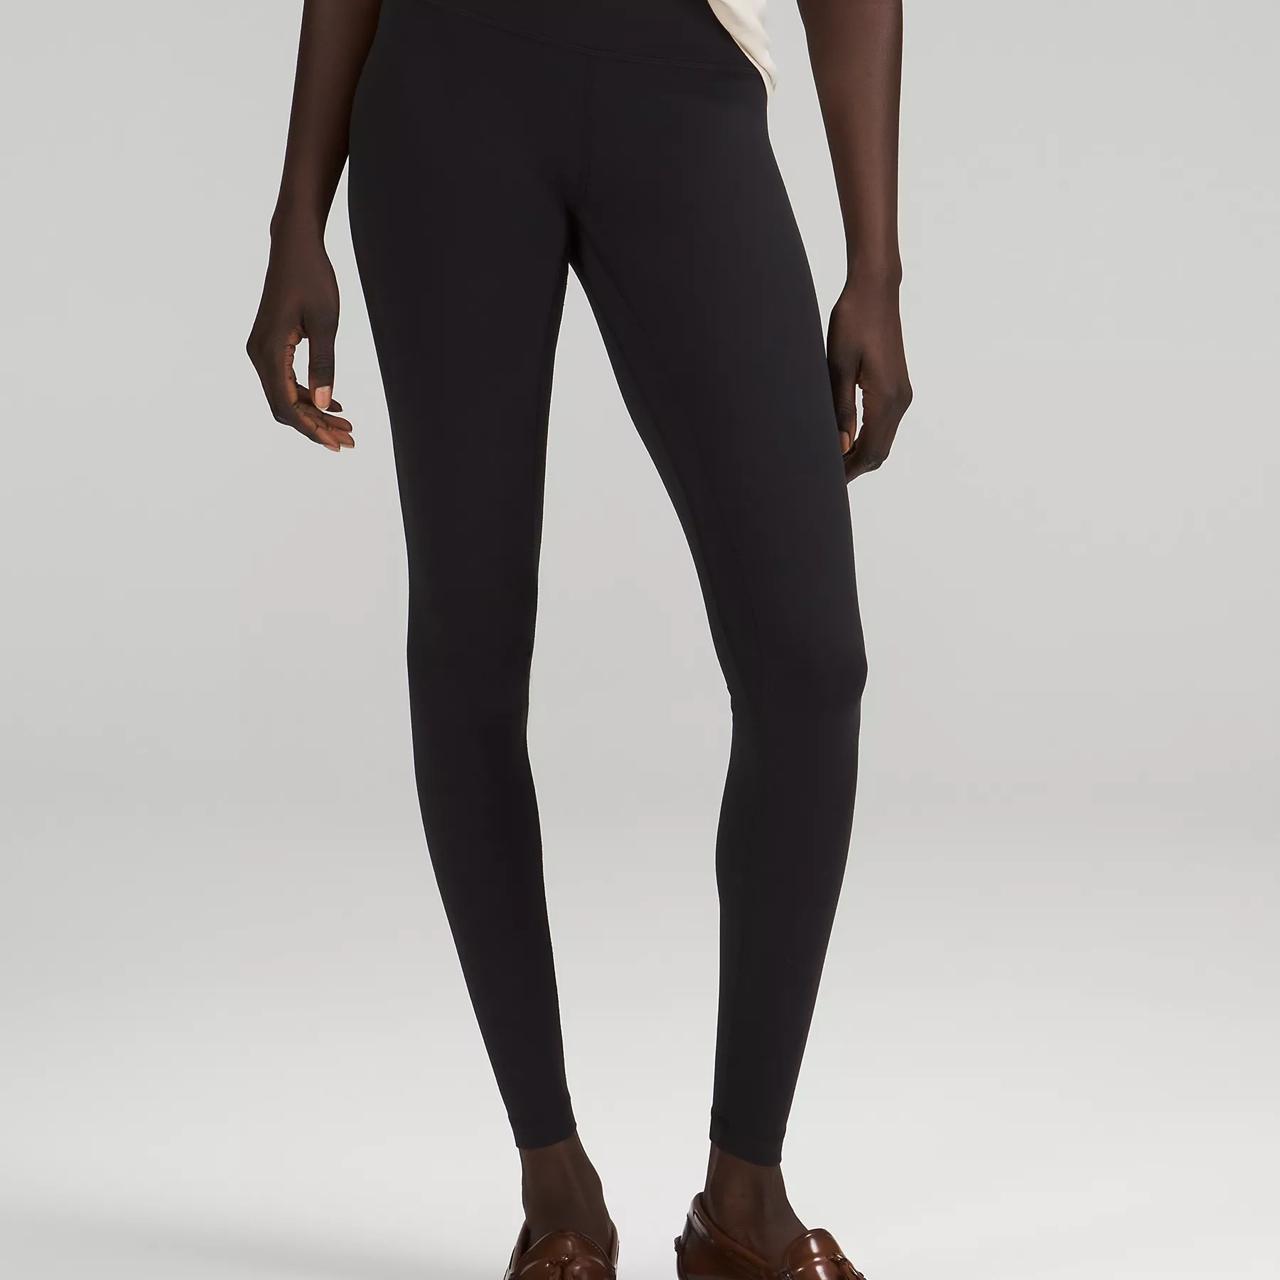 Lululemon Aligh Leggings (12) - Athletic apparel